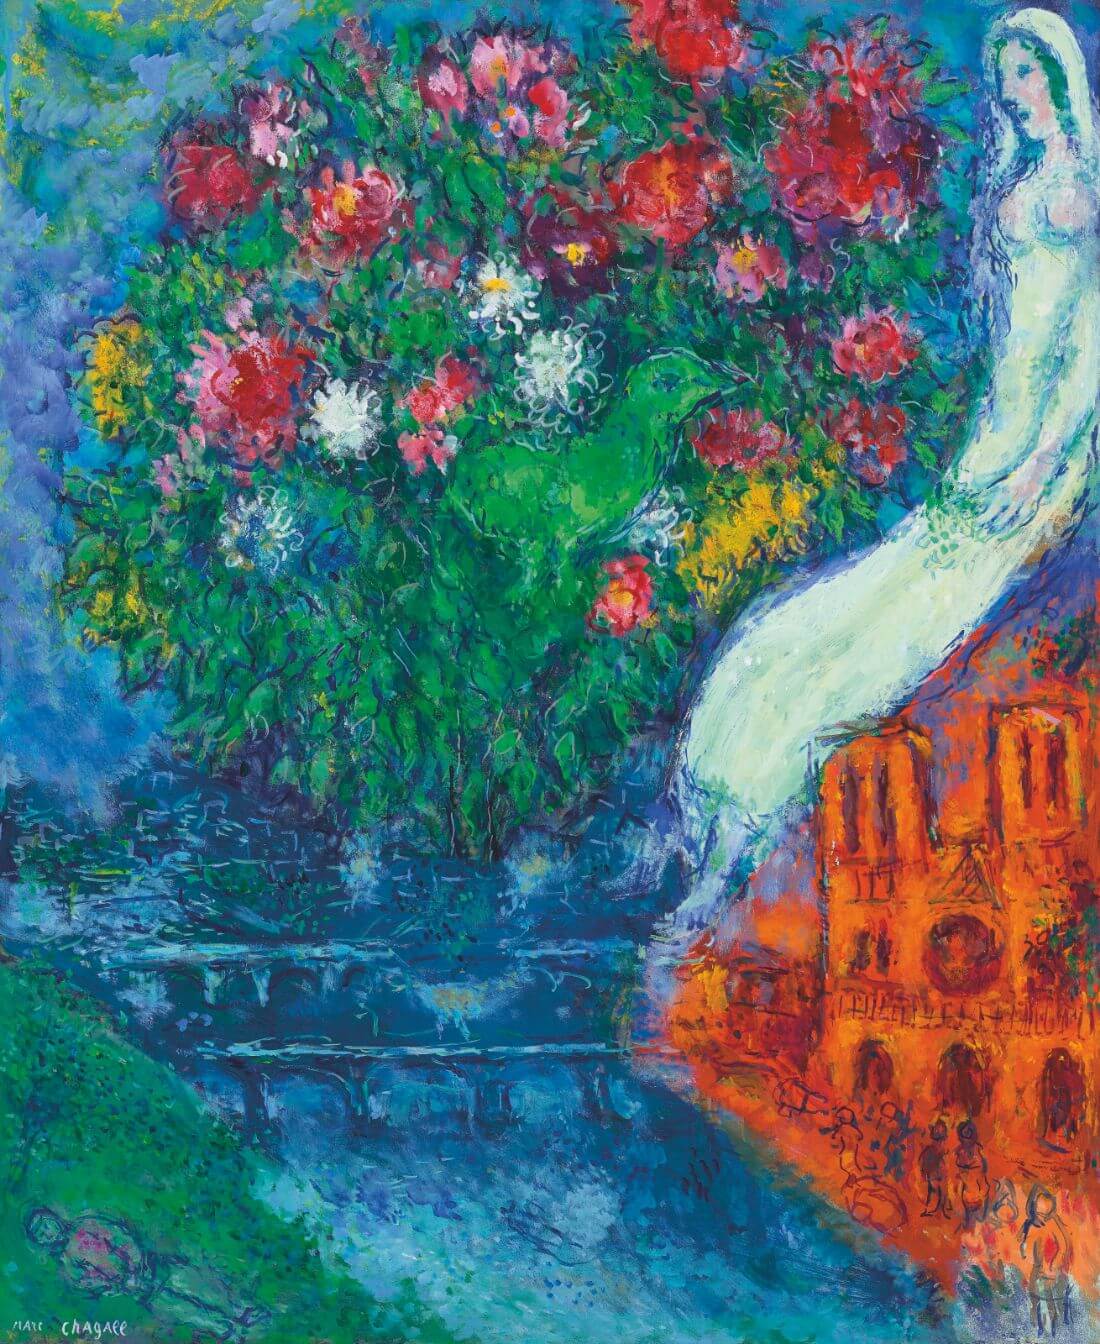 直送品Marc Chagall、LE COUPLE、海外版超希少レゾネ、新品額付 、ara 自然、風景画